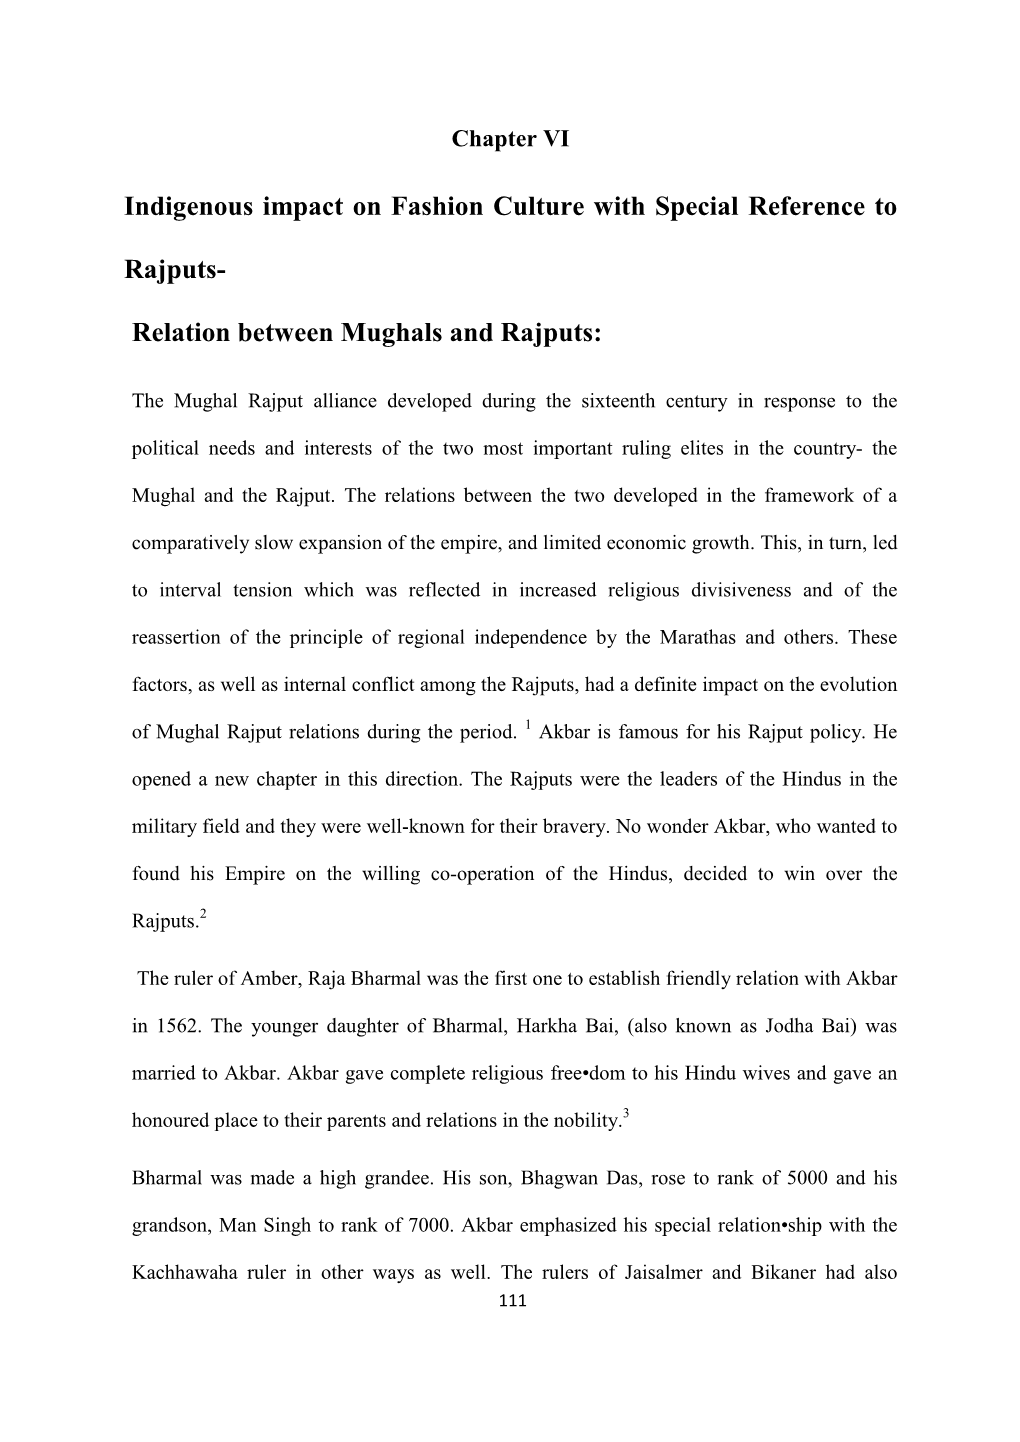 Relation Between Mughals and Rajputs